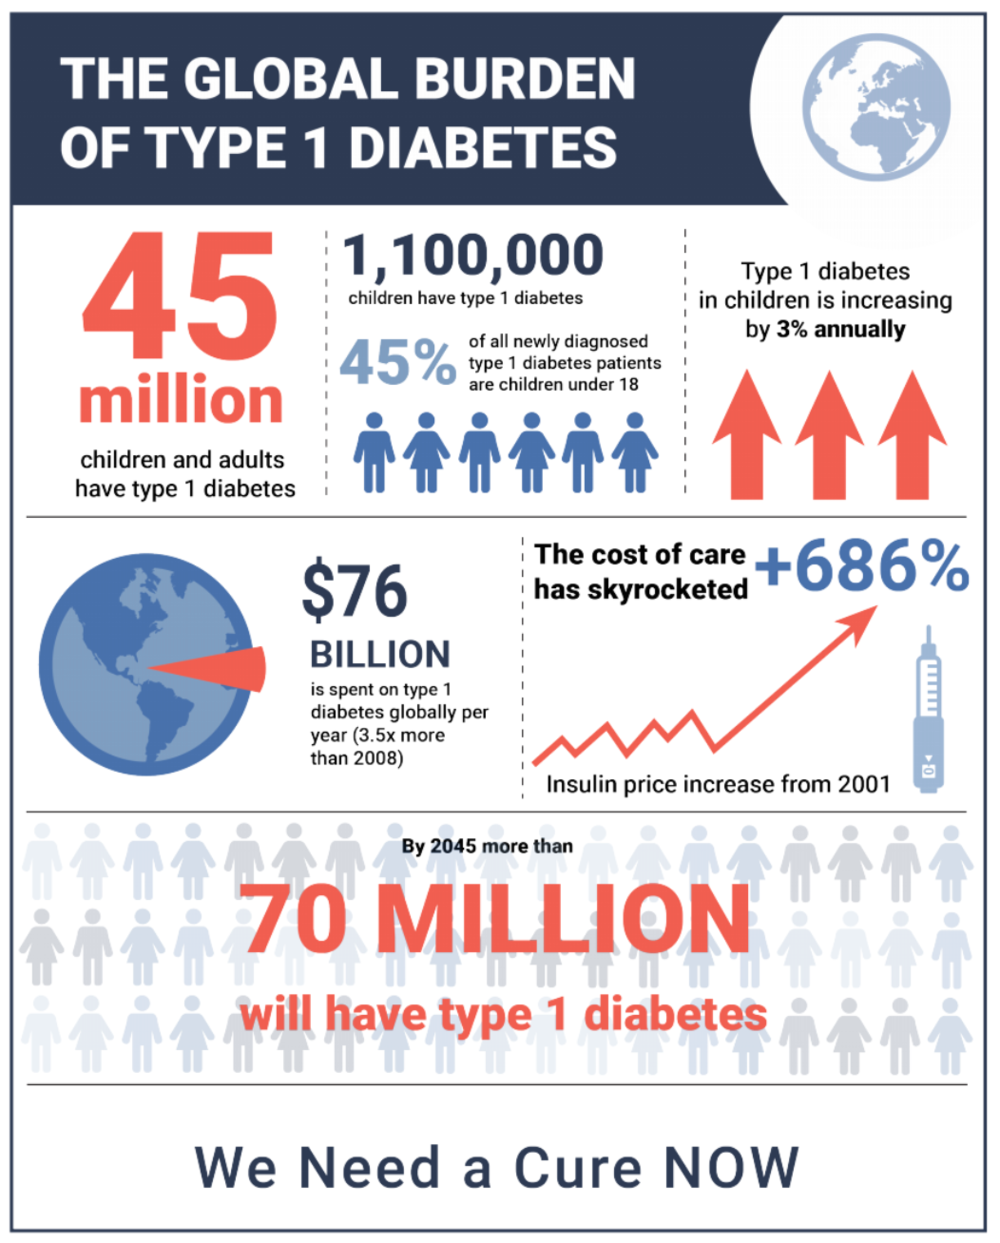 Beware of Illegally Marketed Diabetes Treatments - FDA